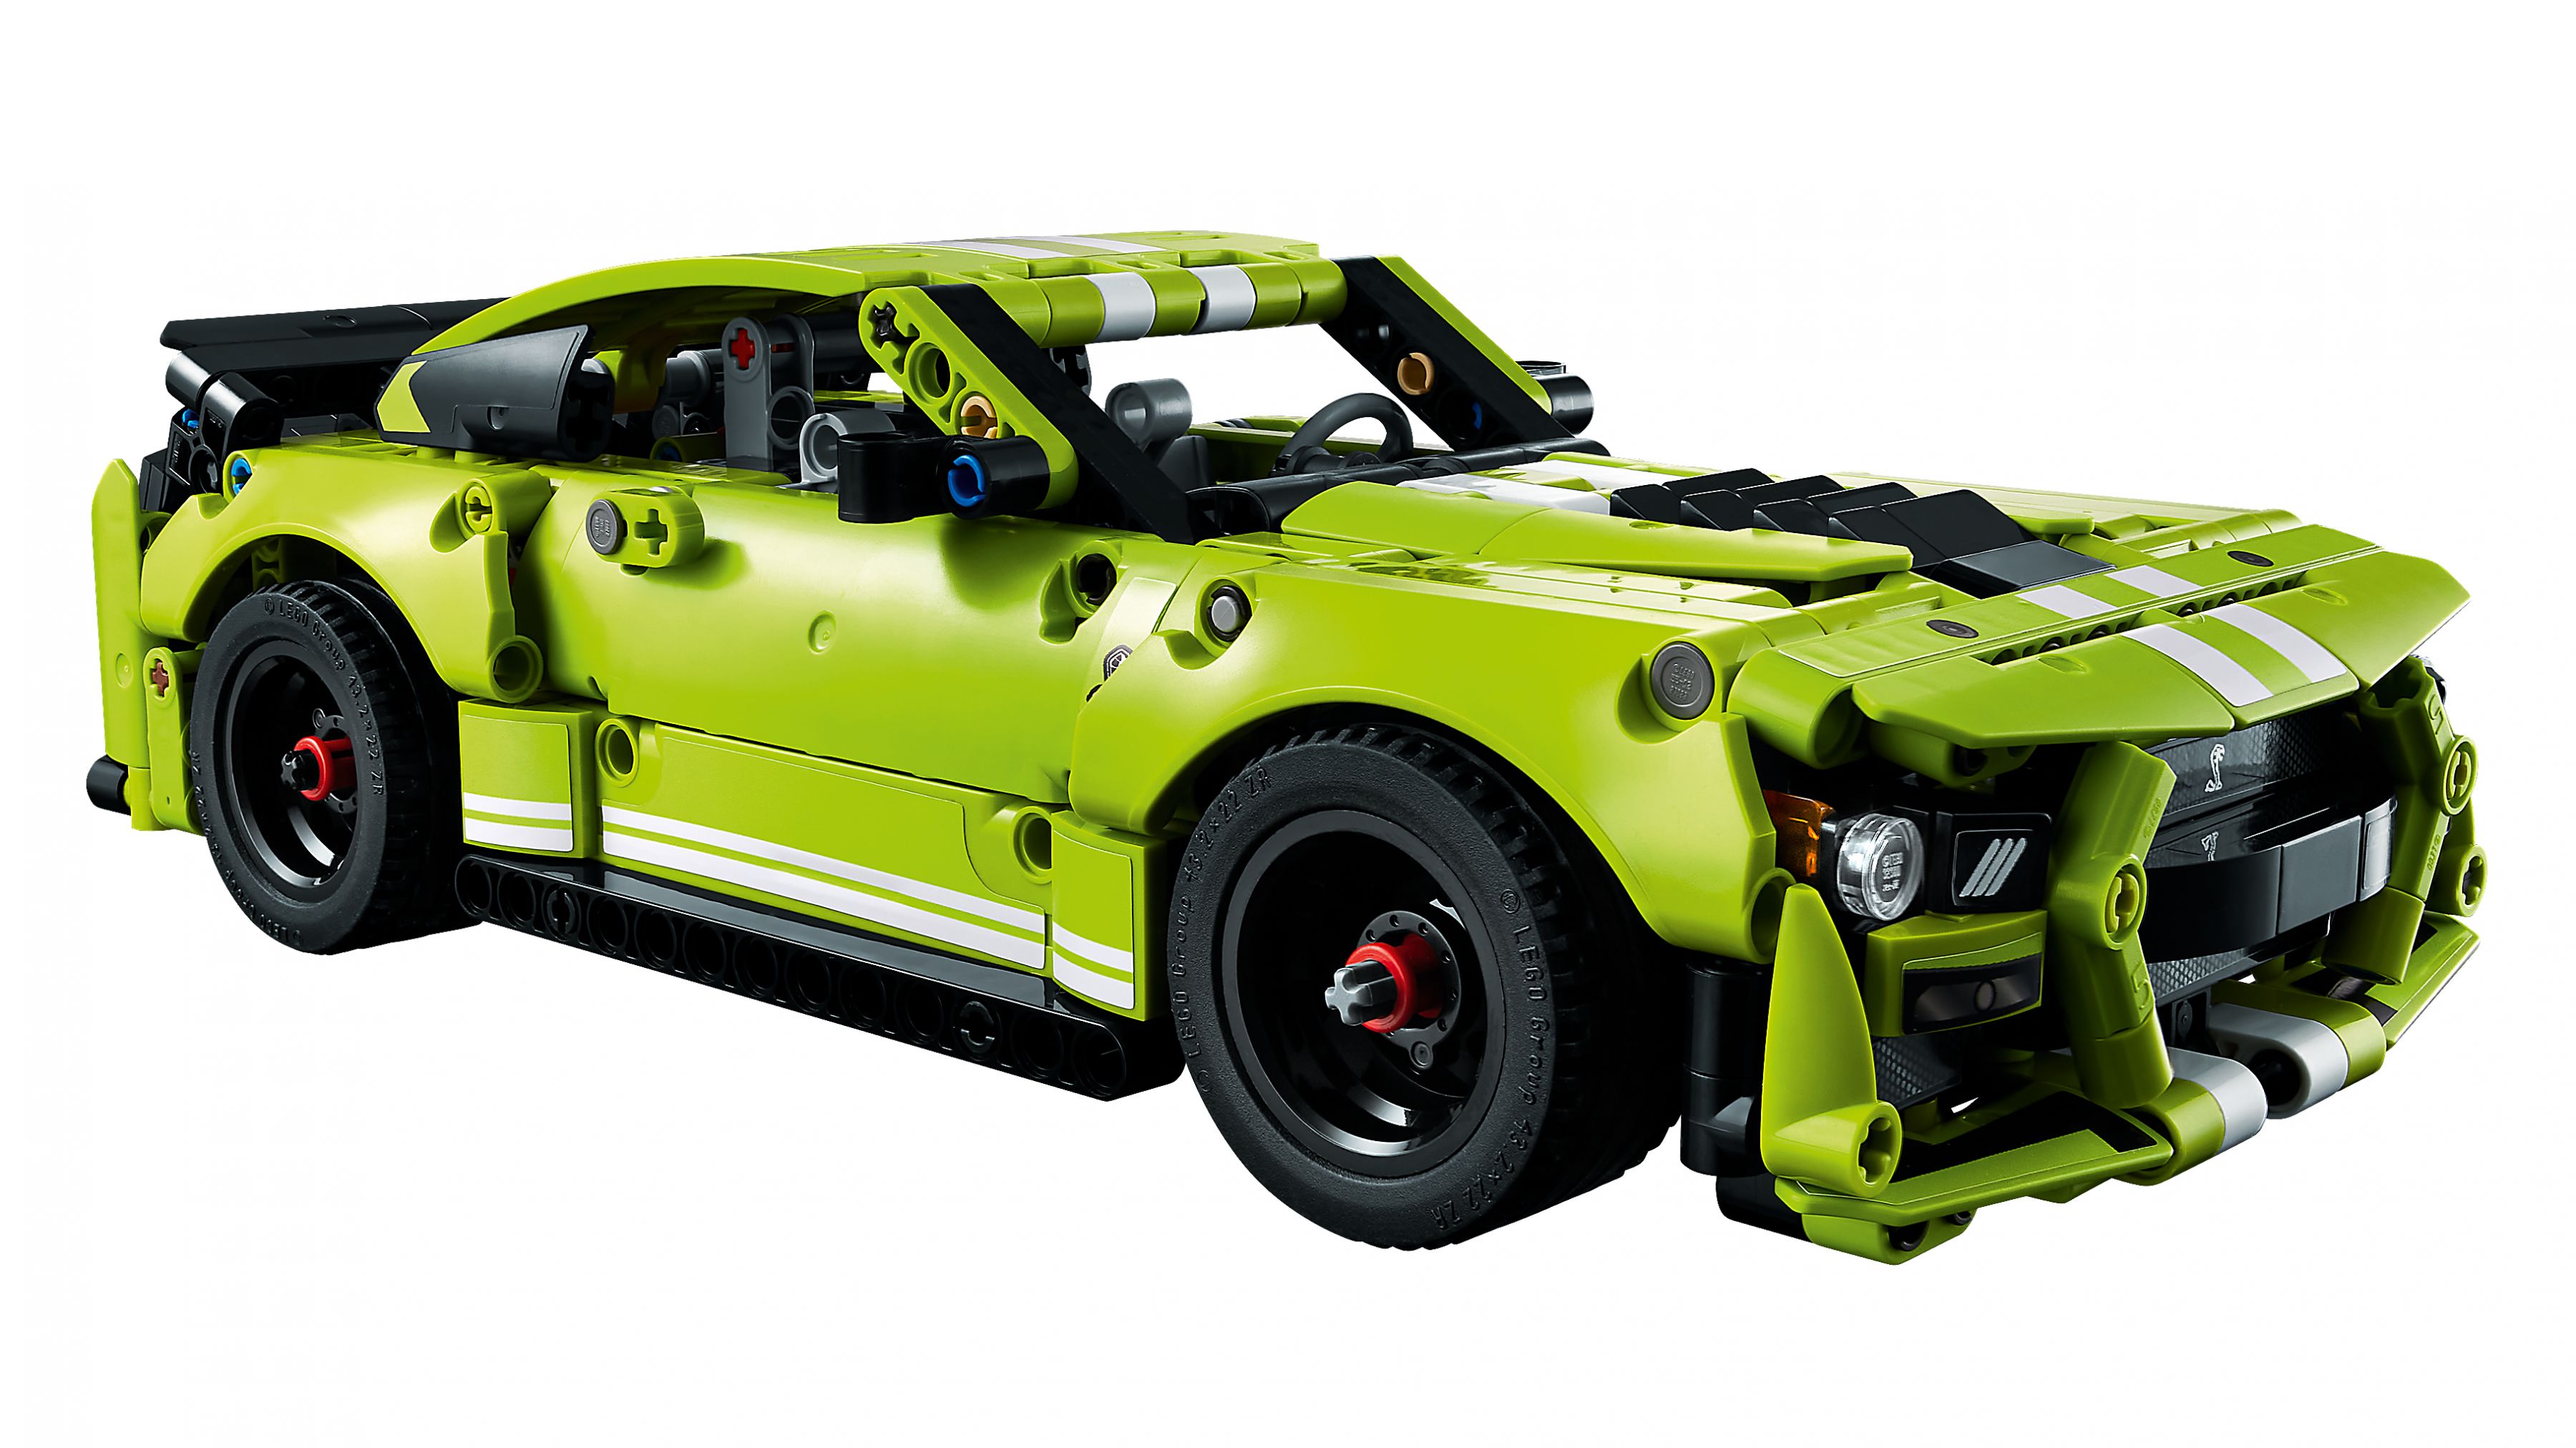 LEGO Technic 42138 Mustang Shelby Cobra LEGO_42138_WEB_SEC01_NOBG.jpg